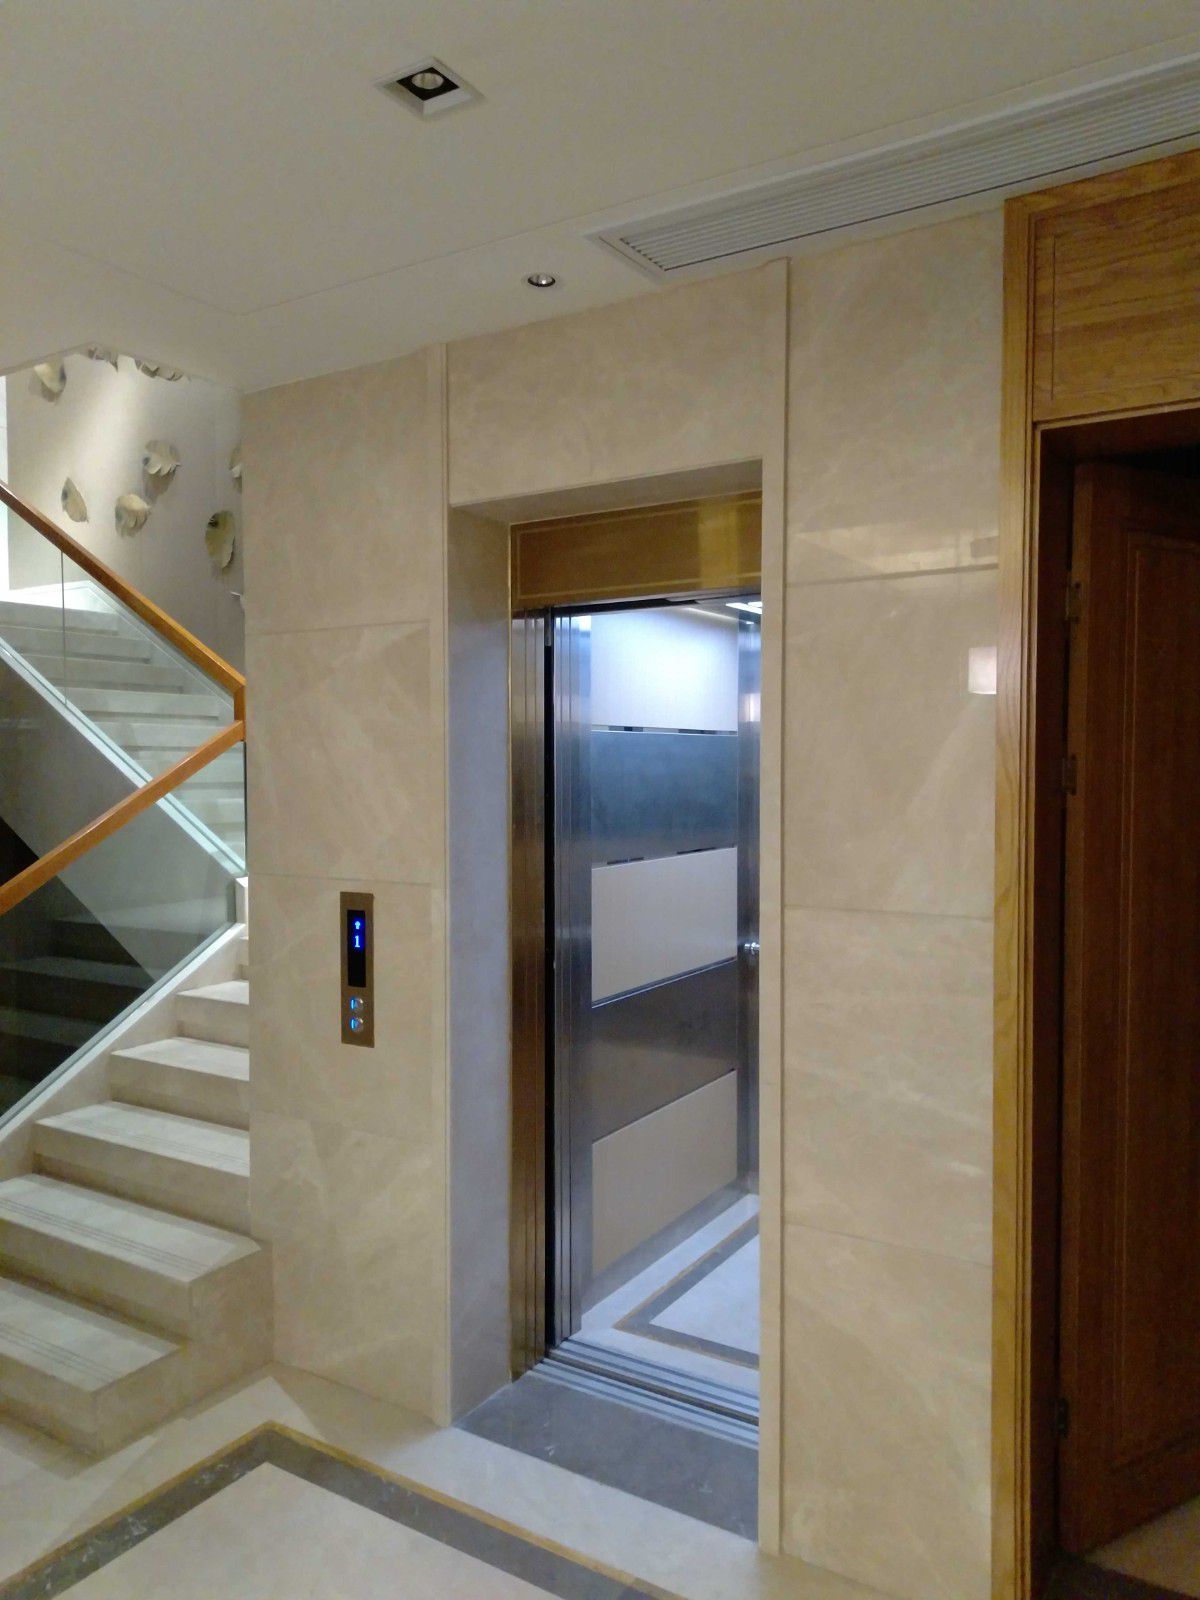 GrenobleHousehold elevator5 Methods of Finding Faults